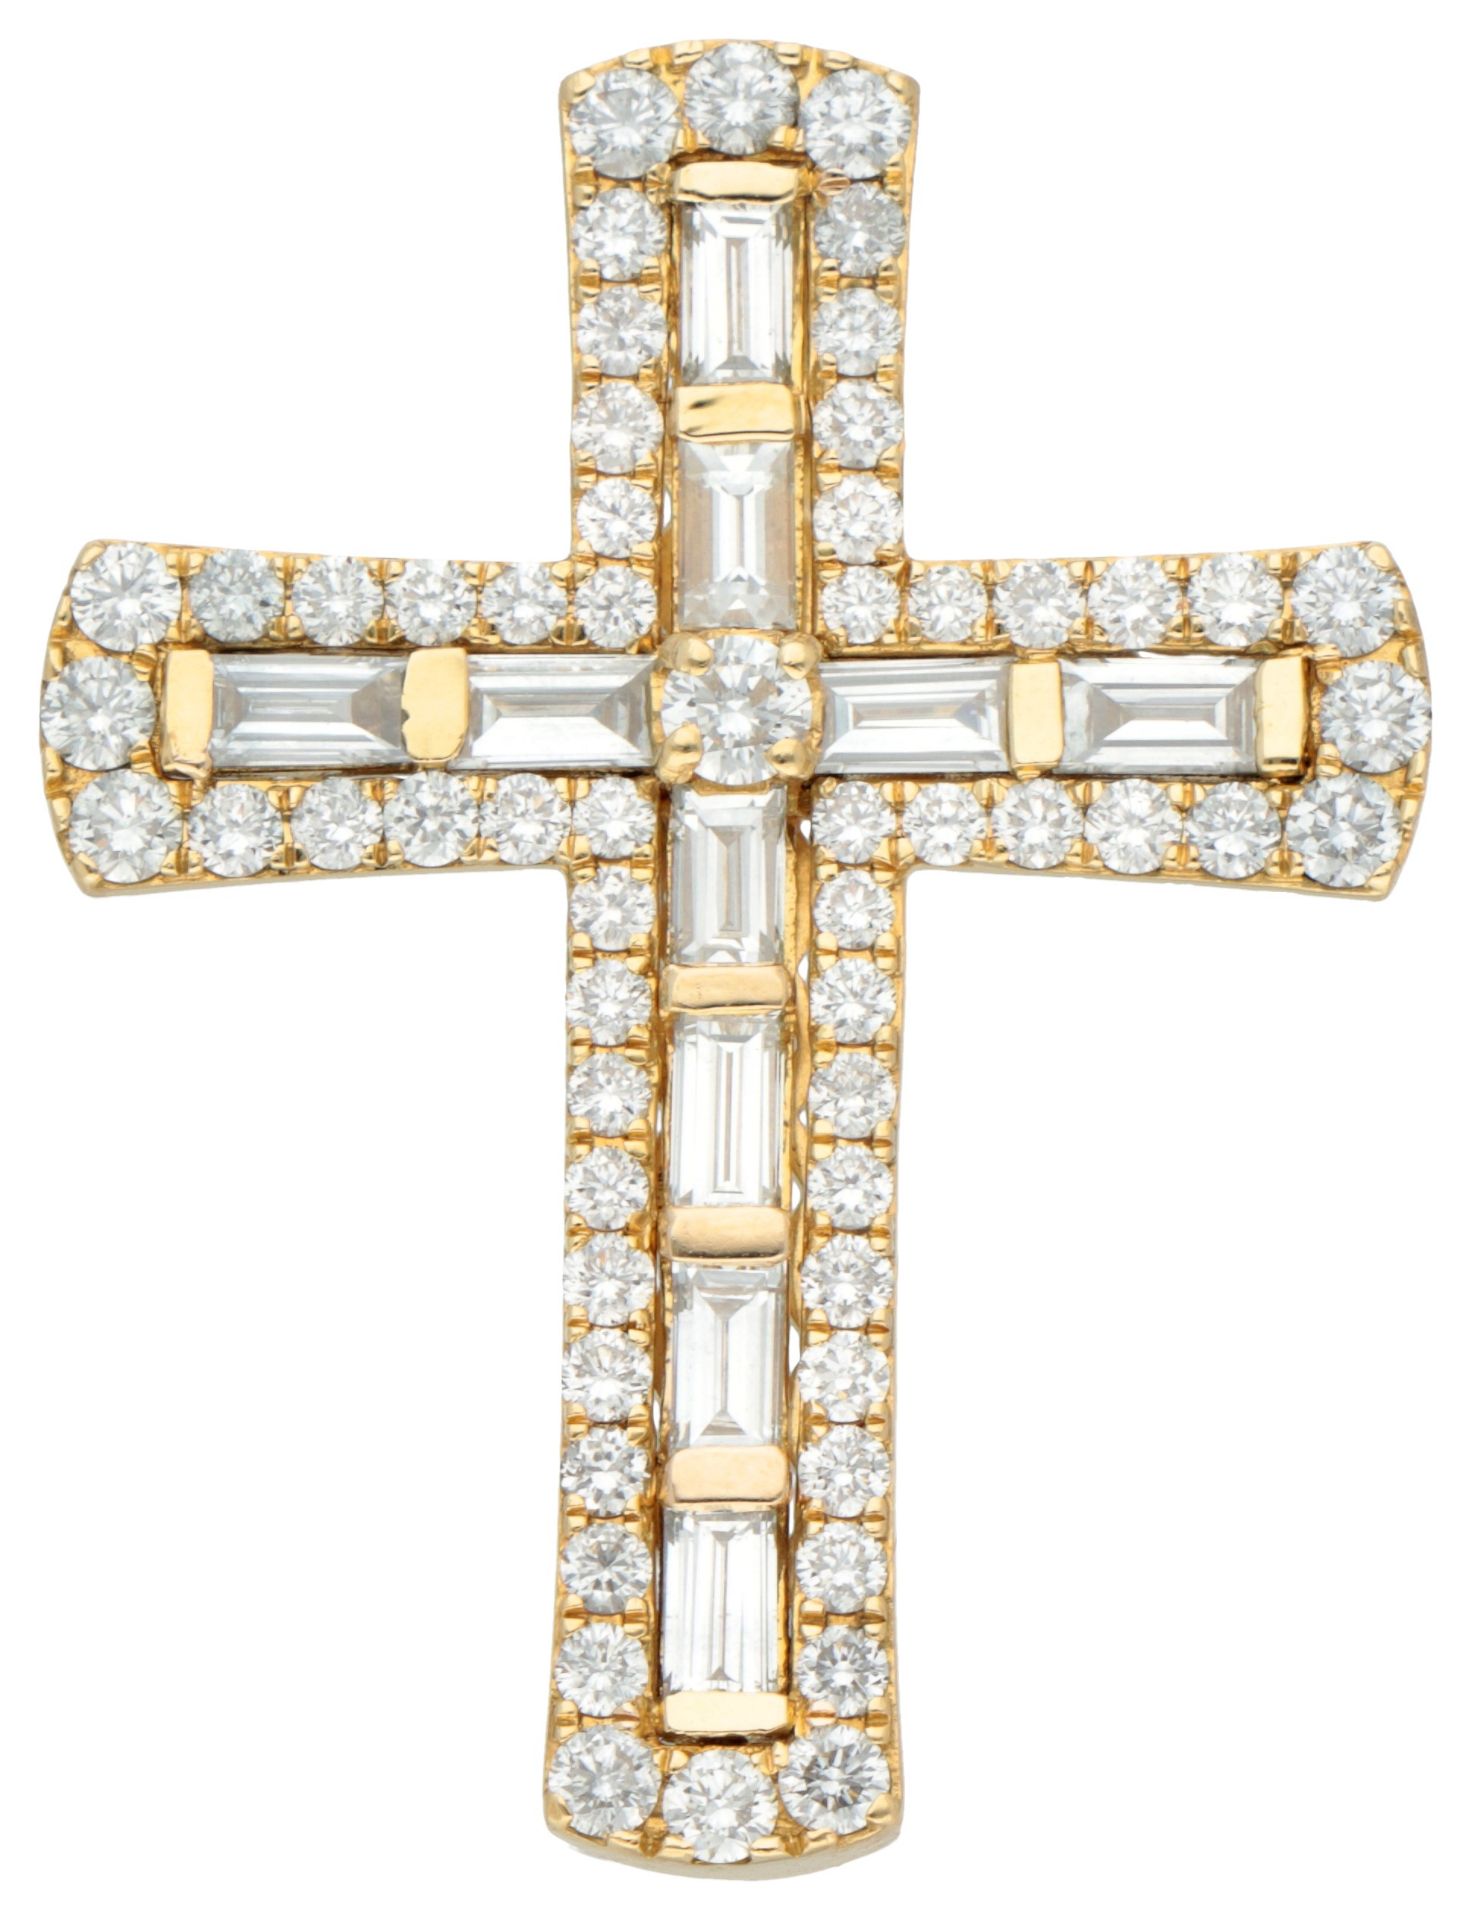 18K Yellow gold diamond cross pendant.